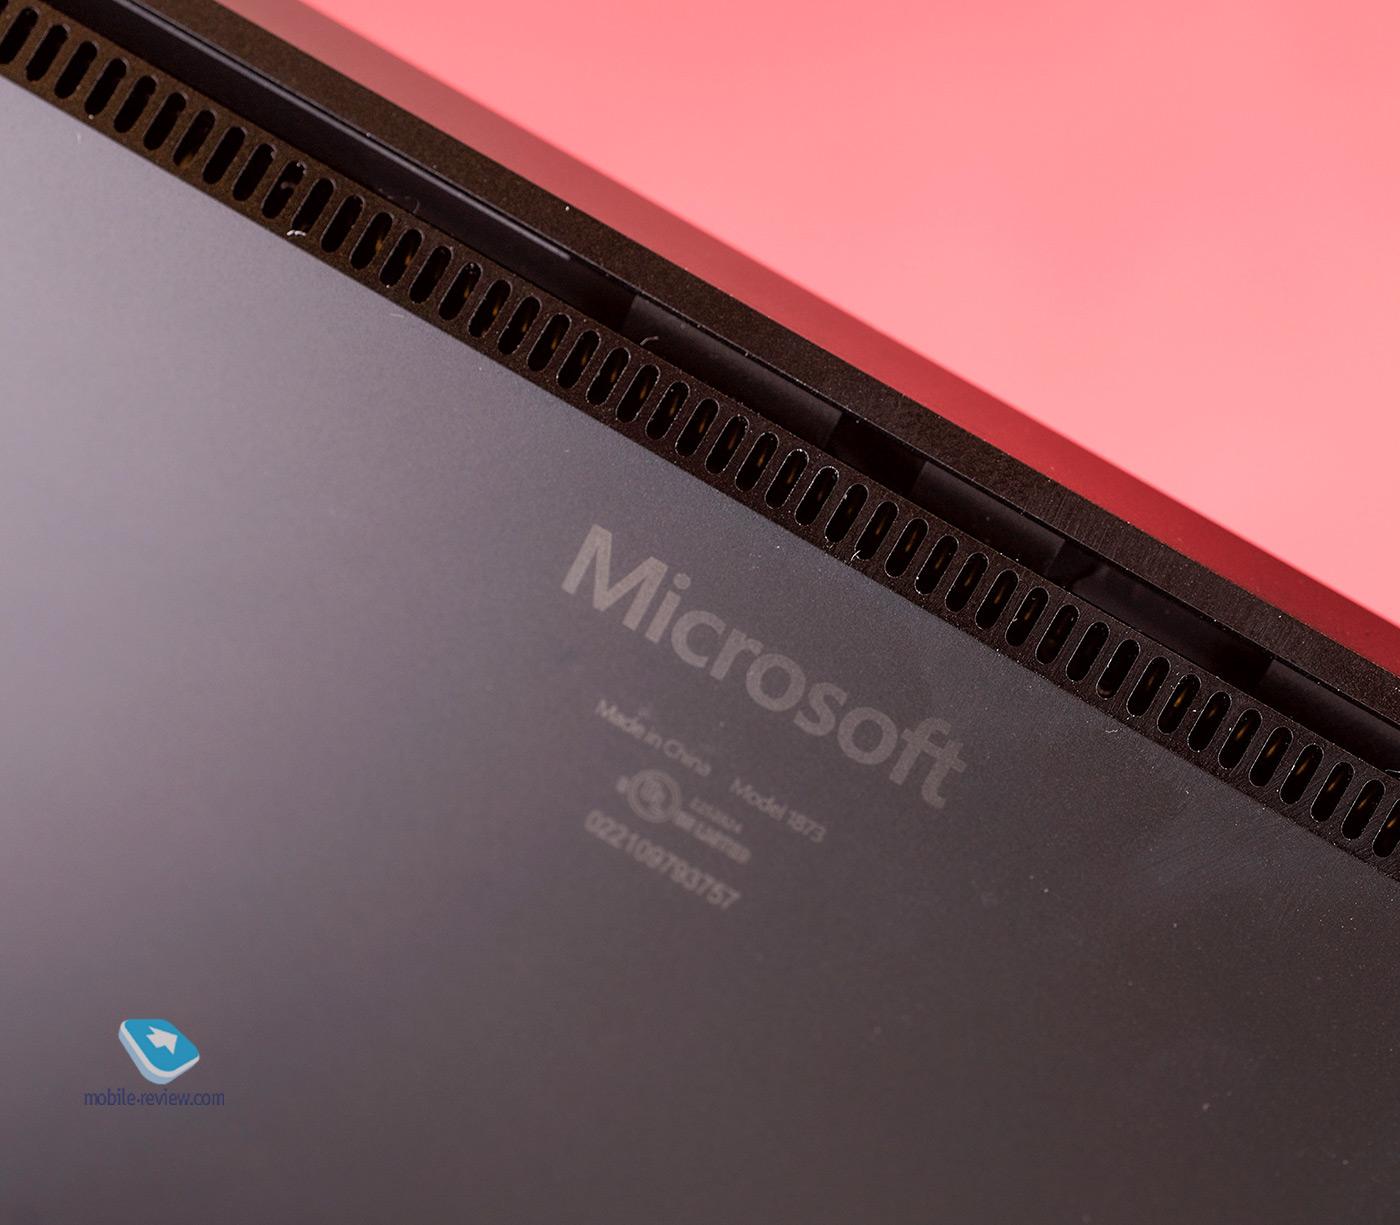   Microsoft Surface Laptop 3 15”